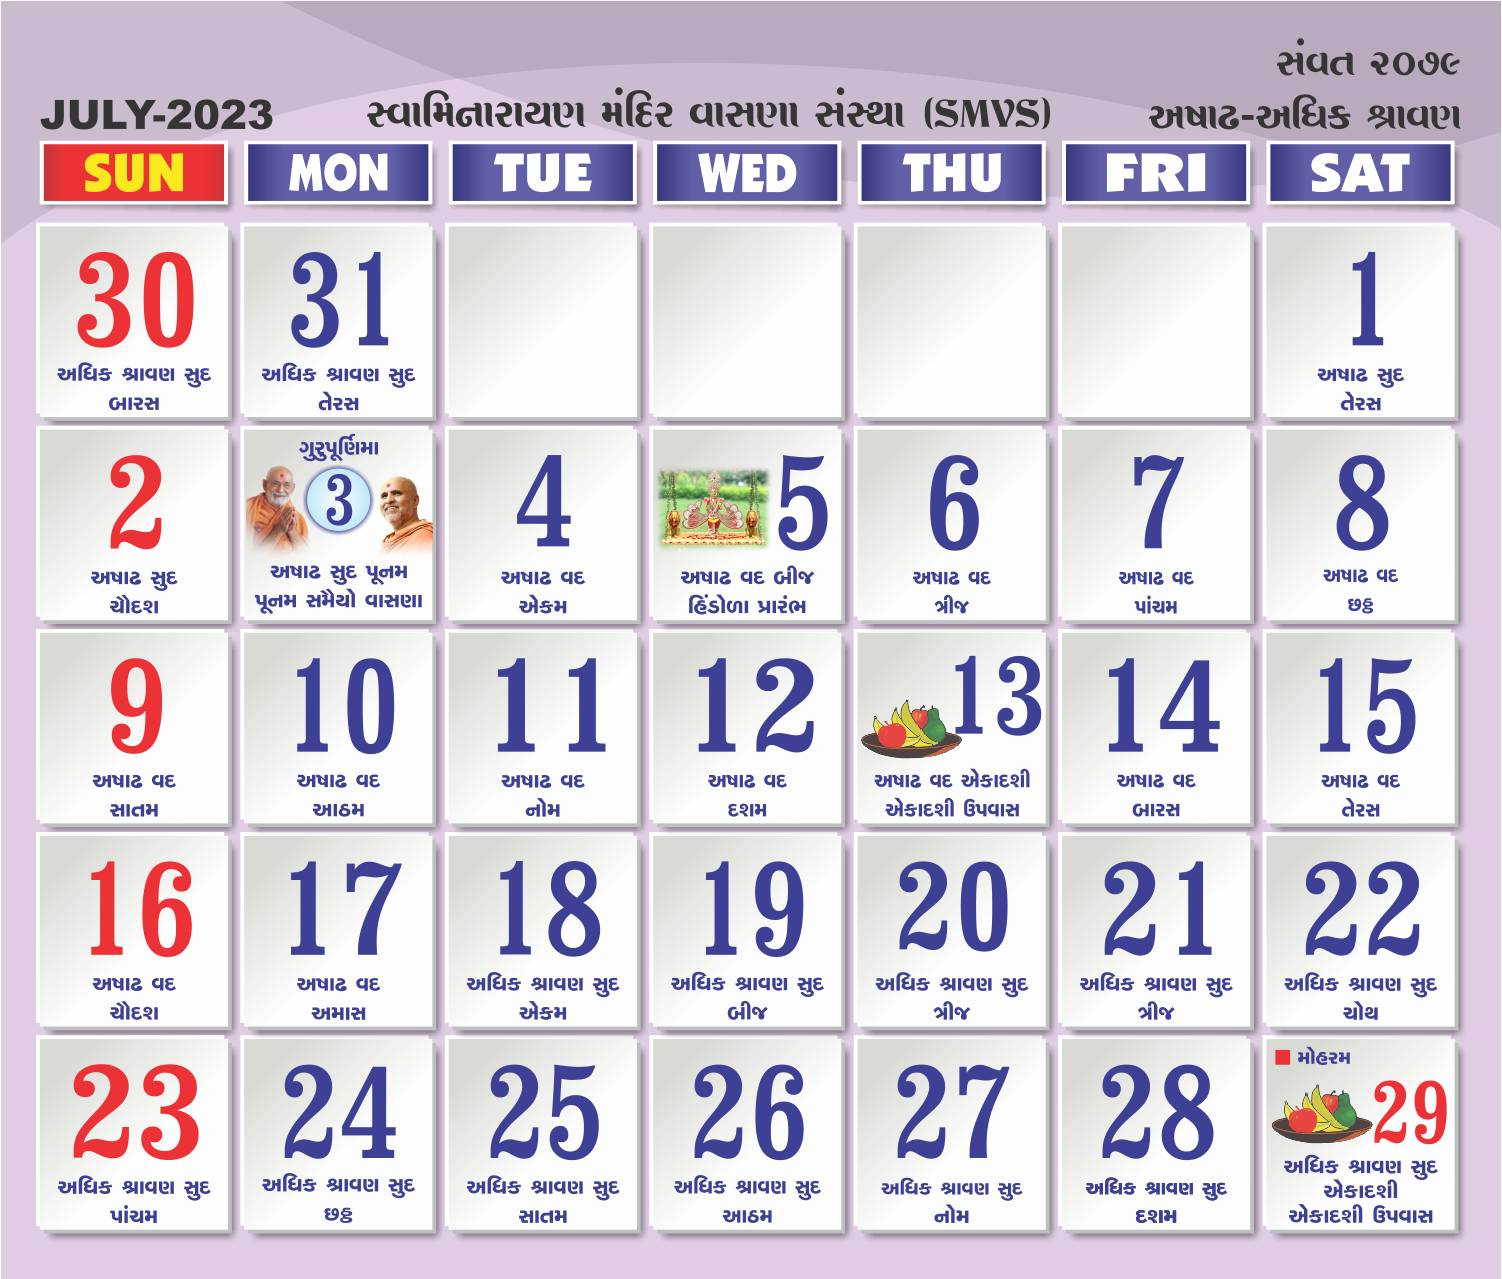 Swaminarayan Mandir Vasna Sanstha - Smvs with regard to Baps Calendar 2024 July